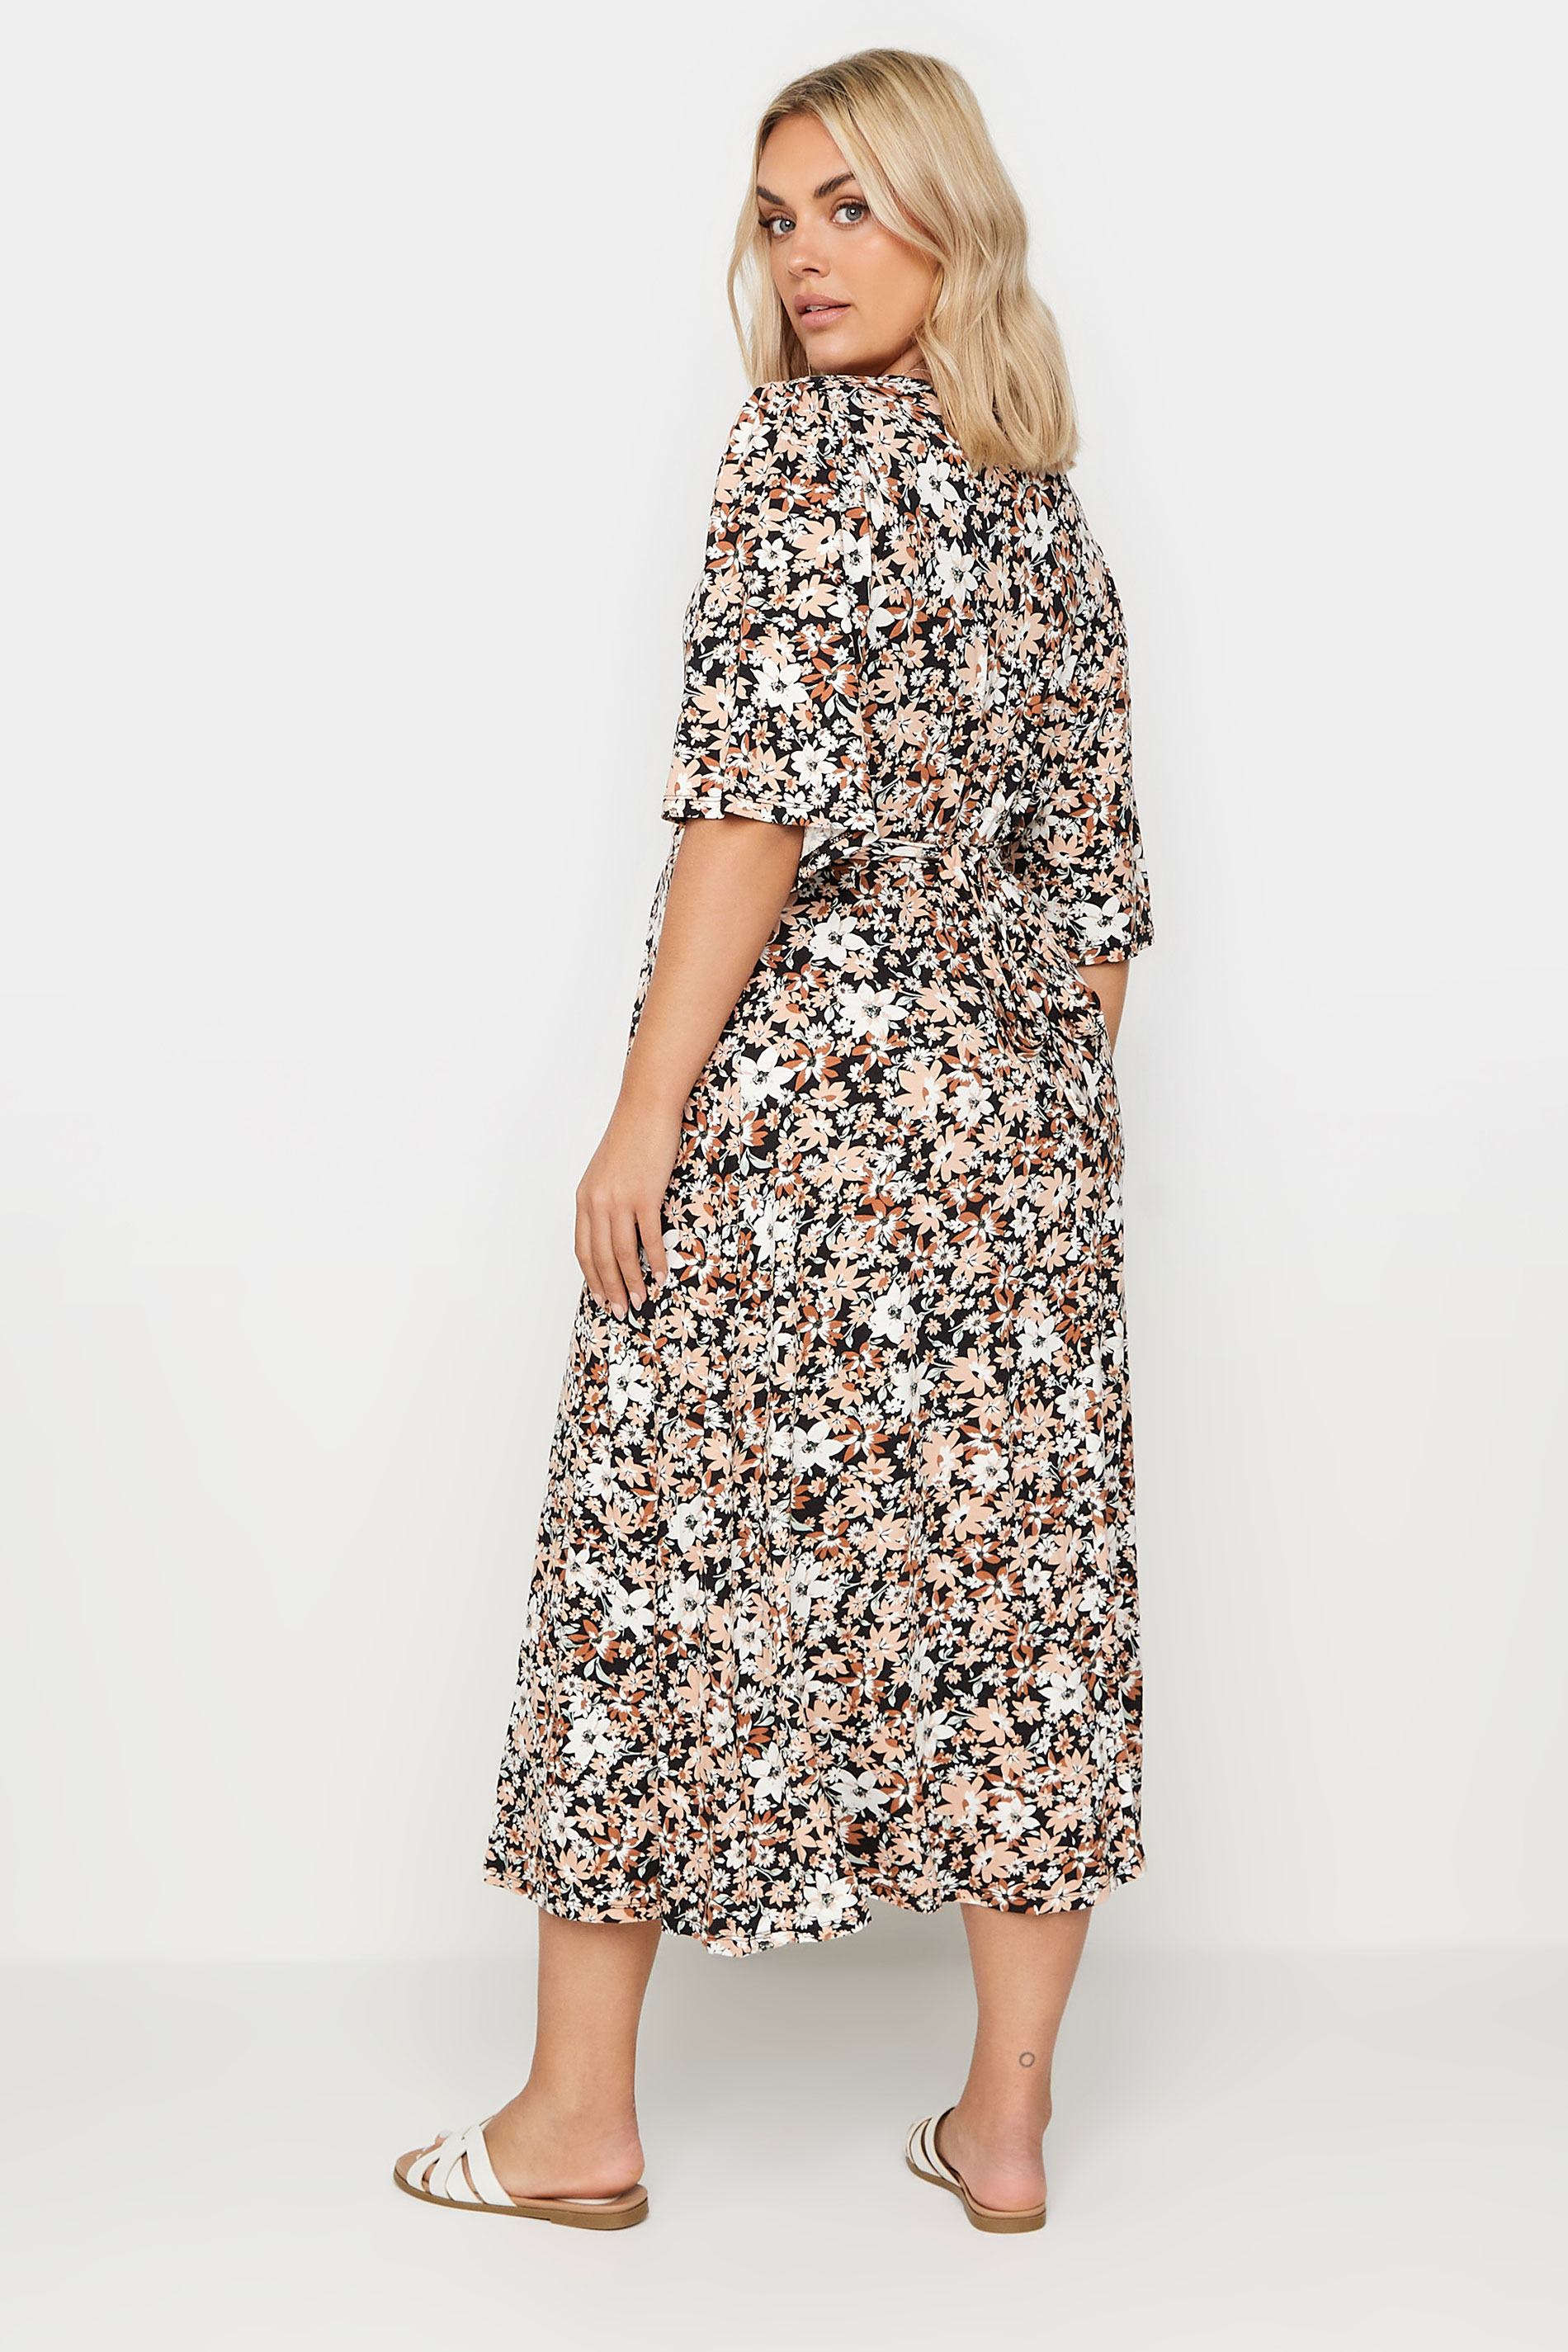 YOURS Plus Size Black Floral Print Midi Wrap Dress | Yours Clothing 3